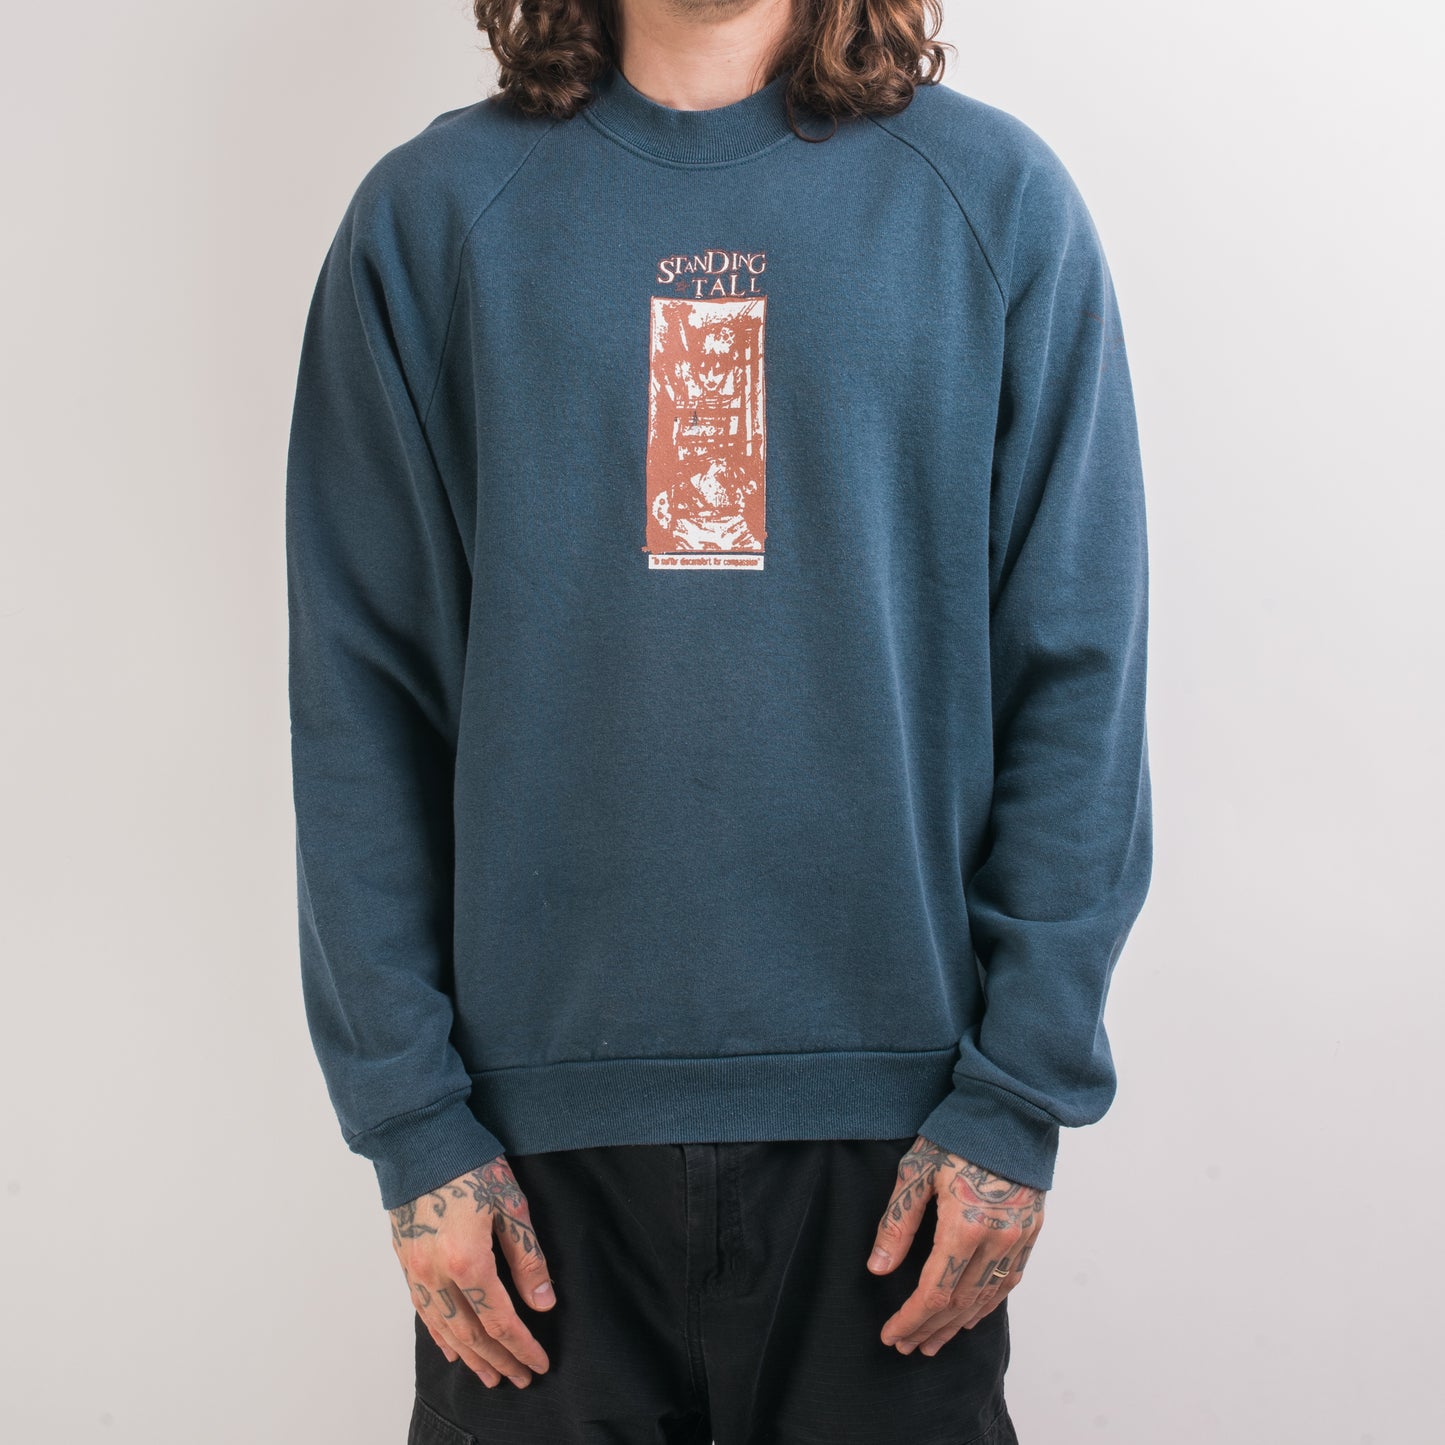 Vintage 90’s Standing Tall Sweatshirt